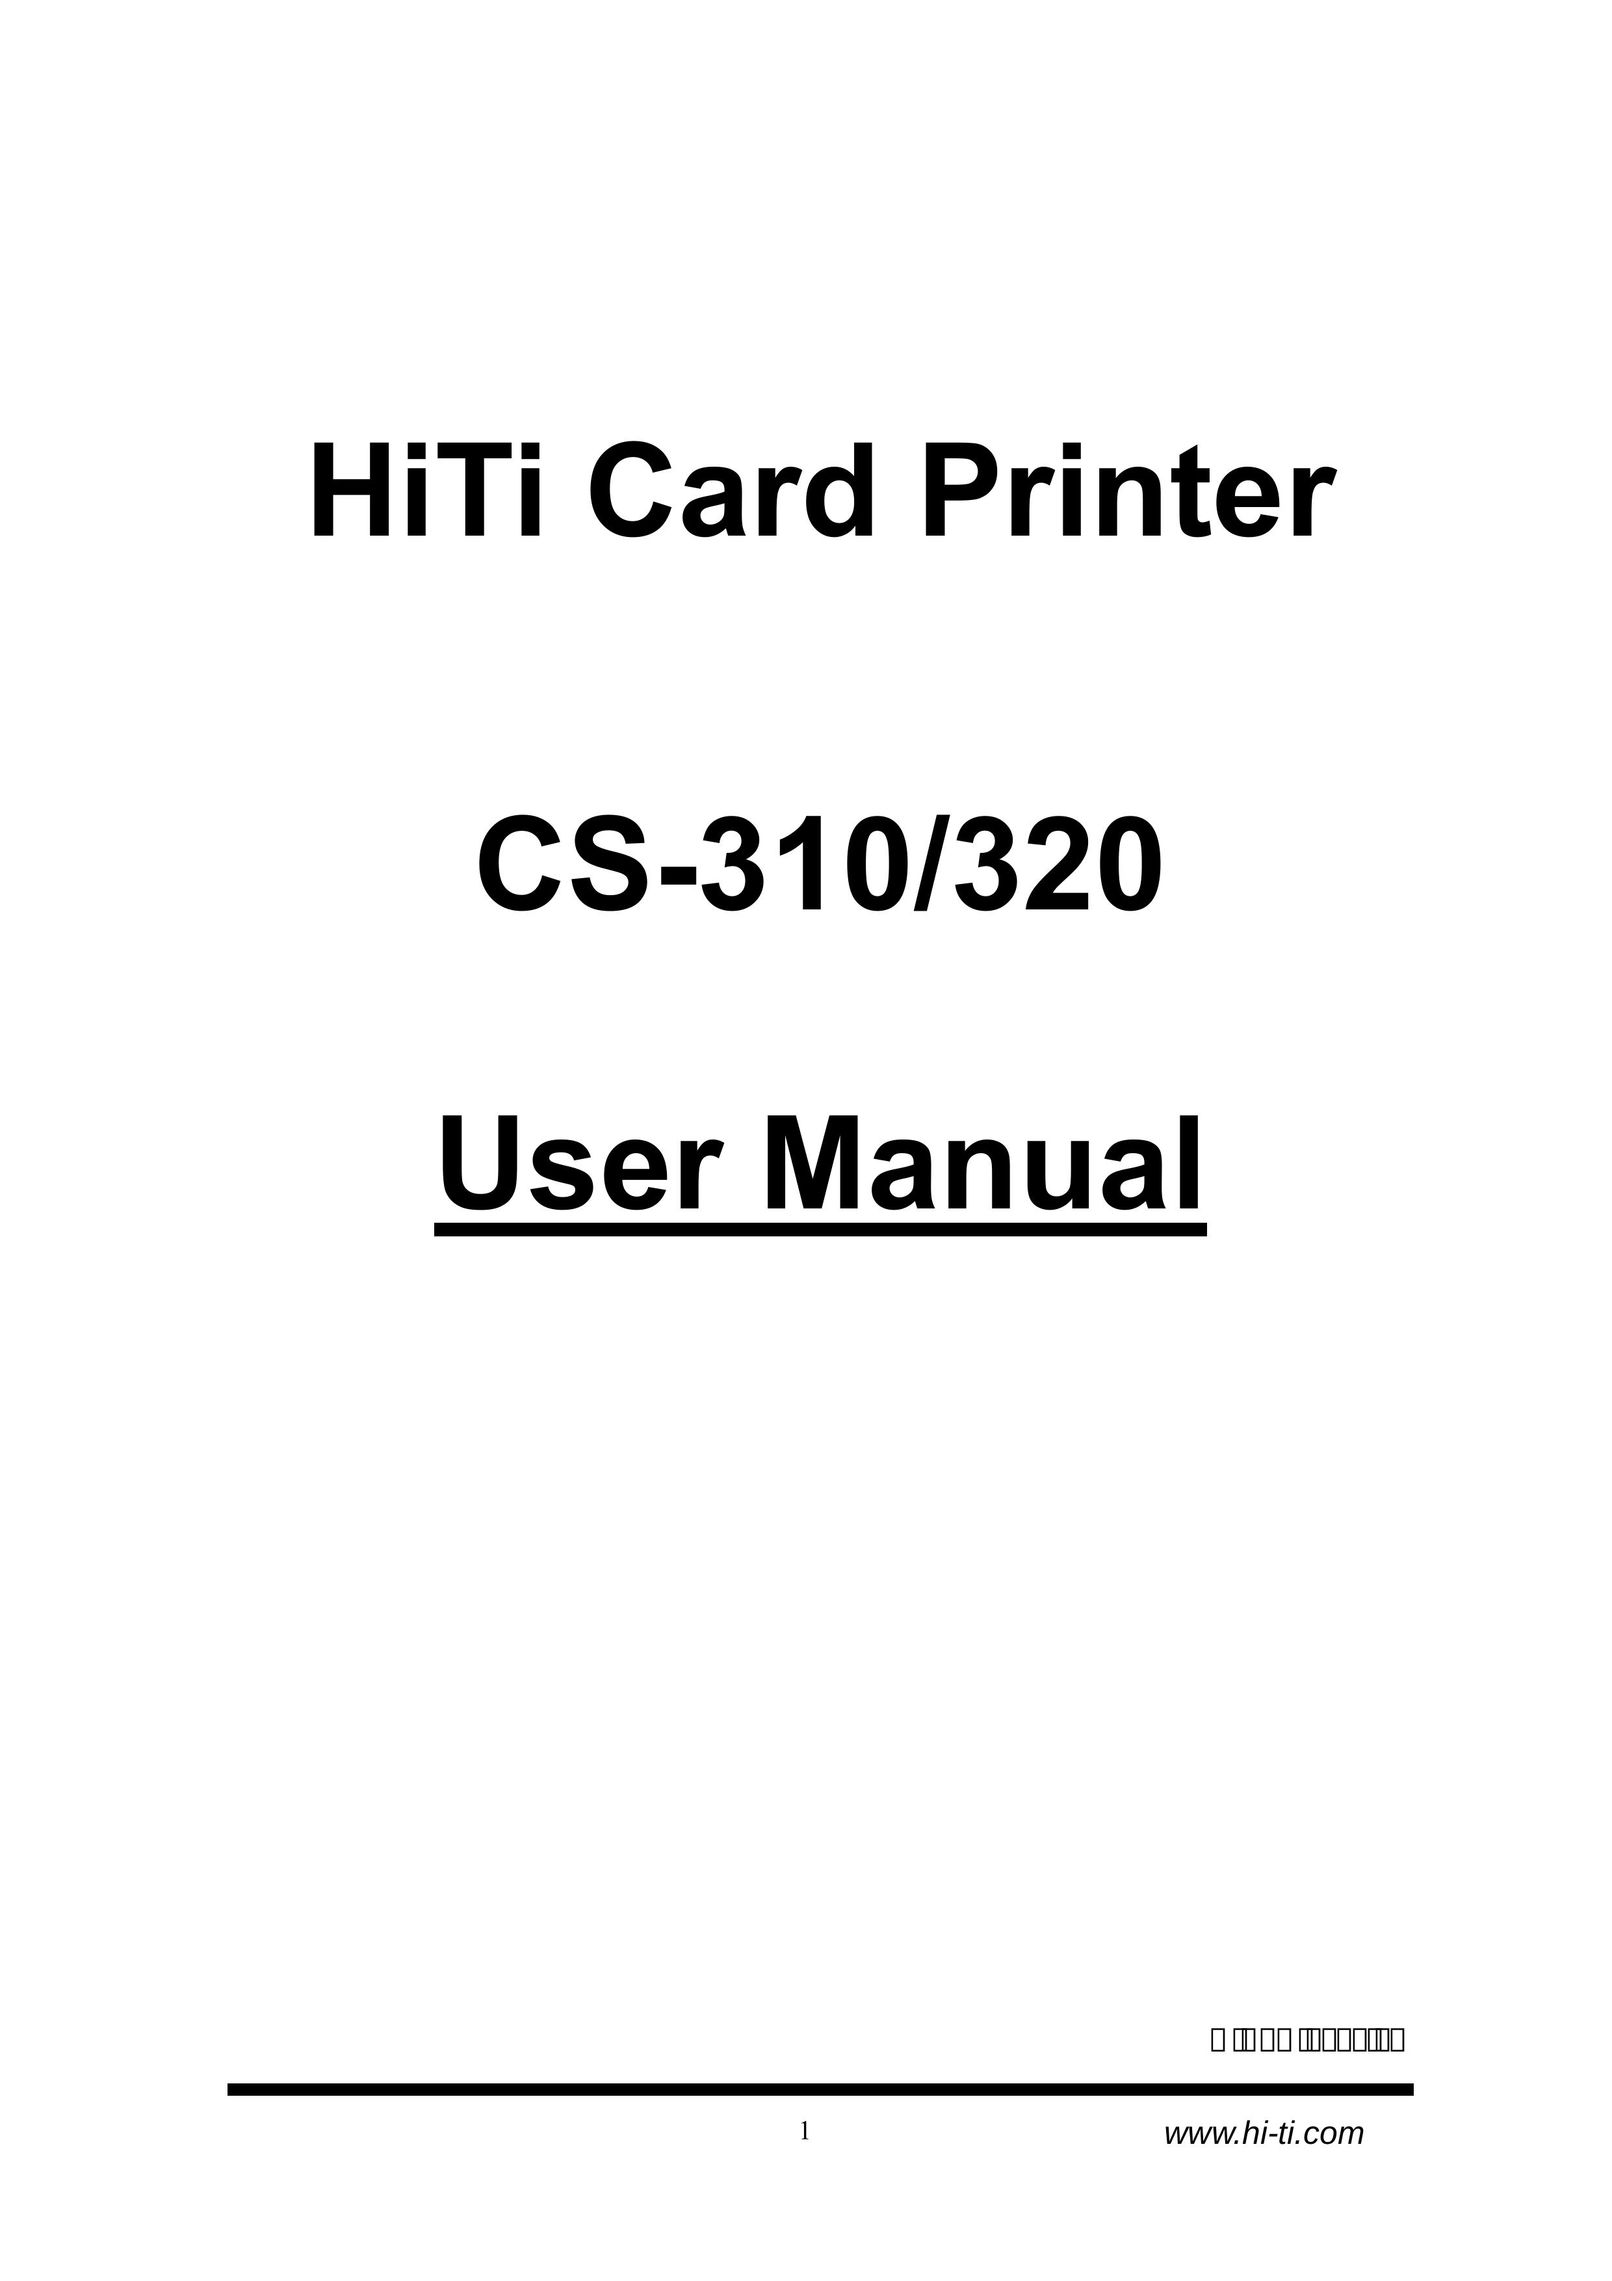 Hi-Touch Imaging Technologies CS-320 Printer User Manual